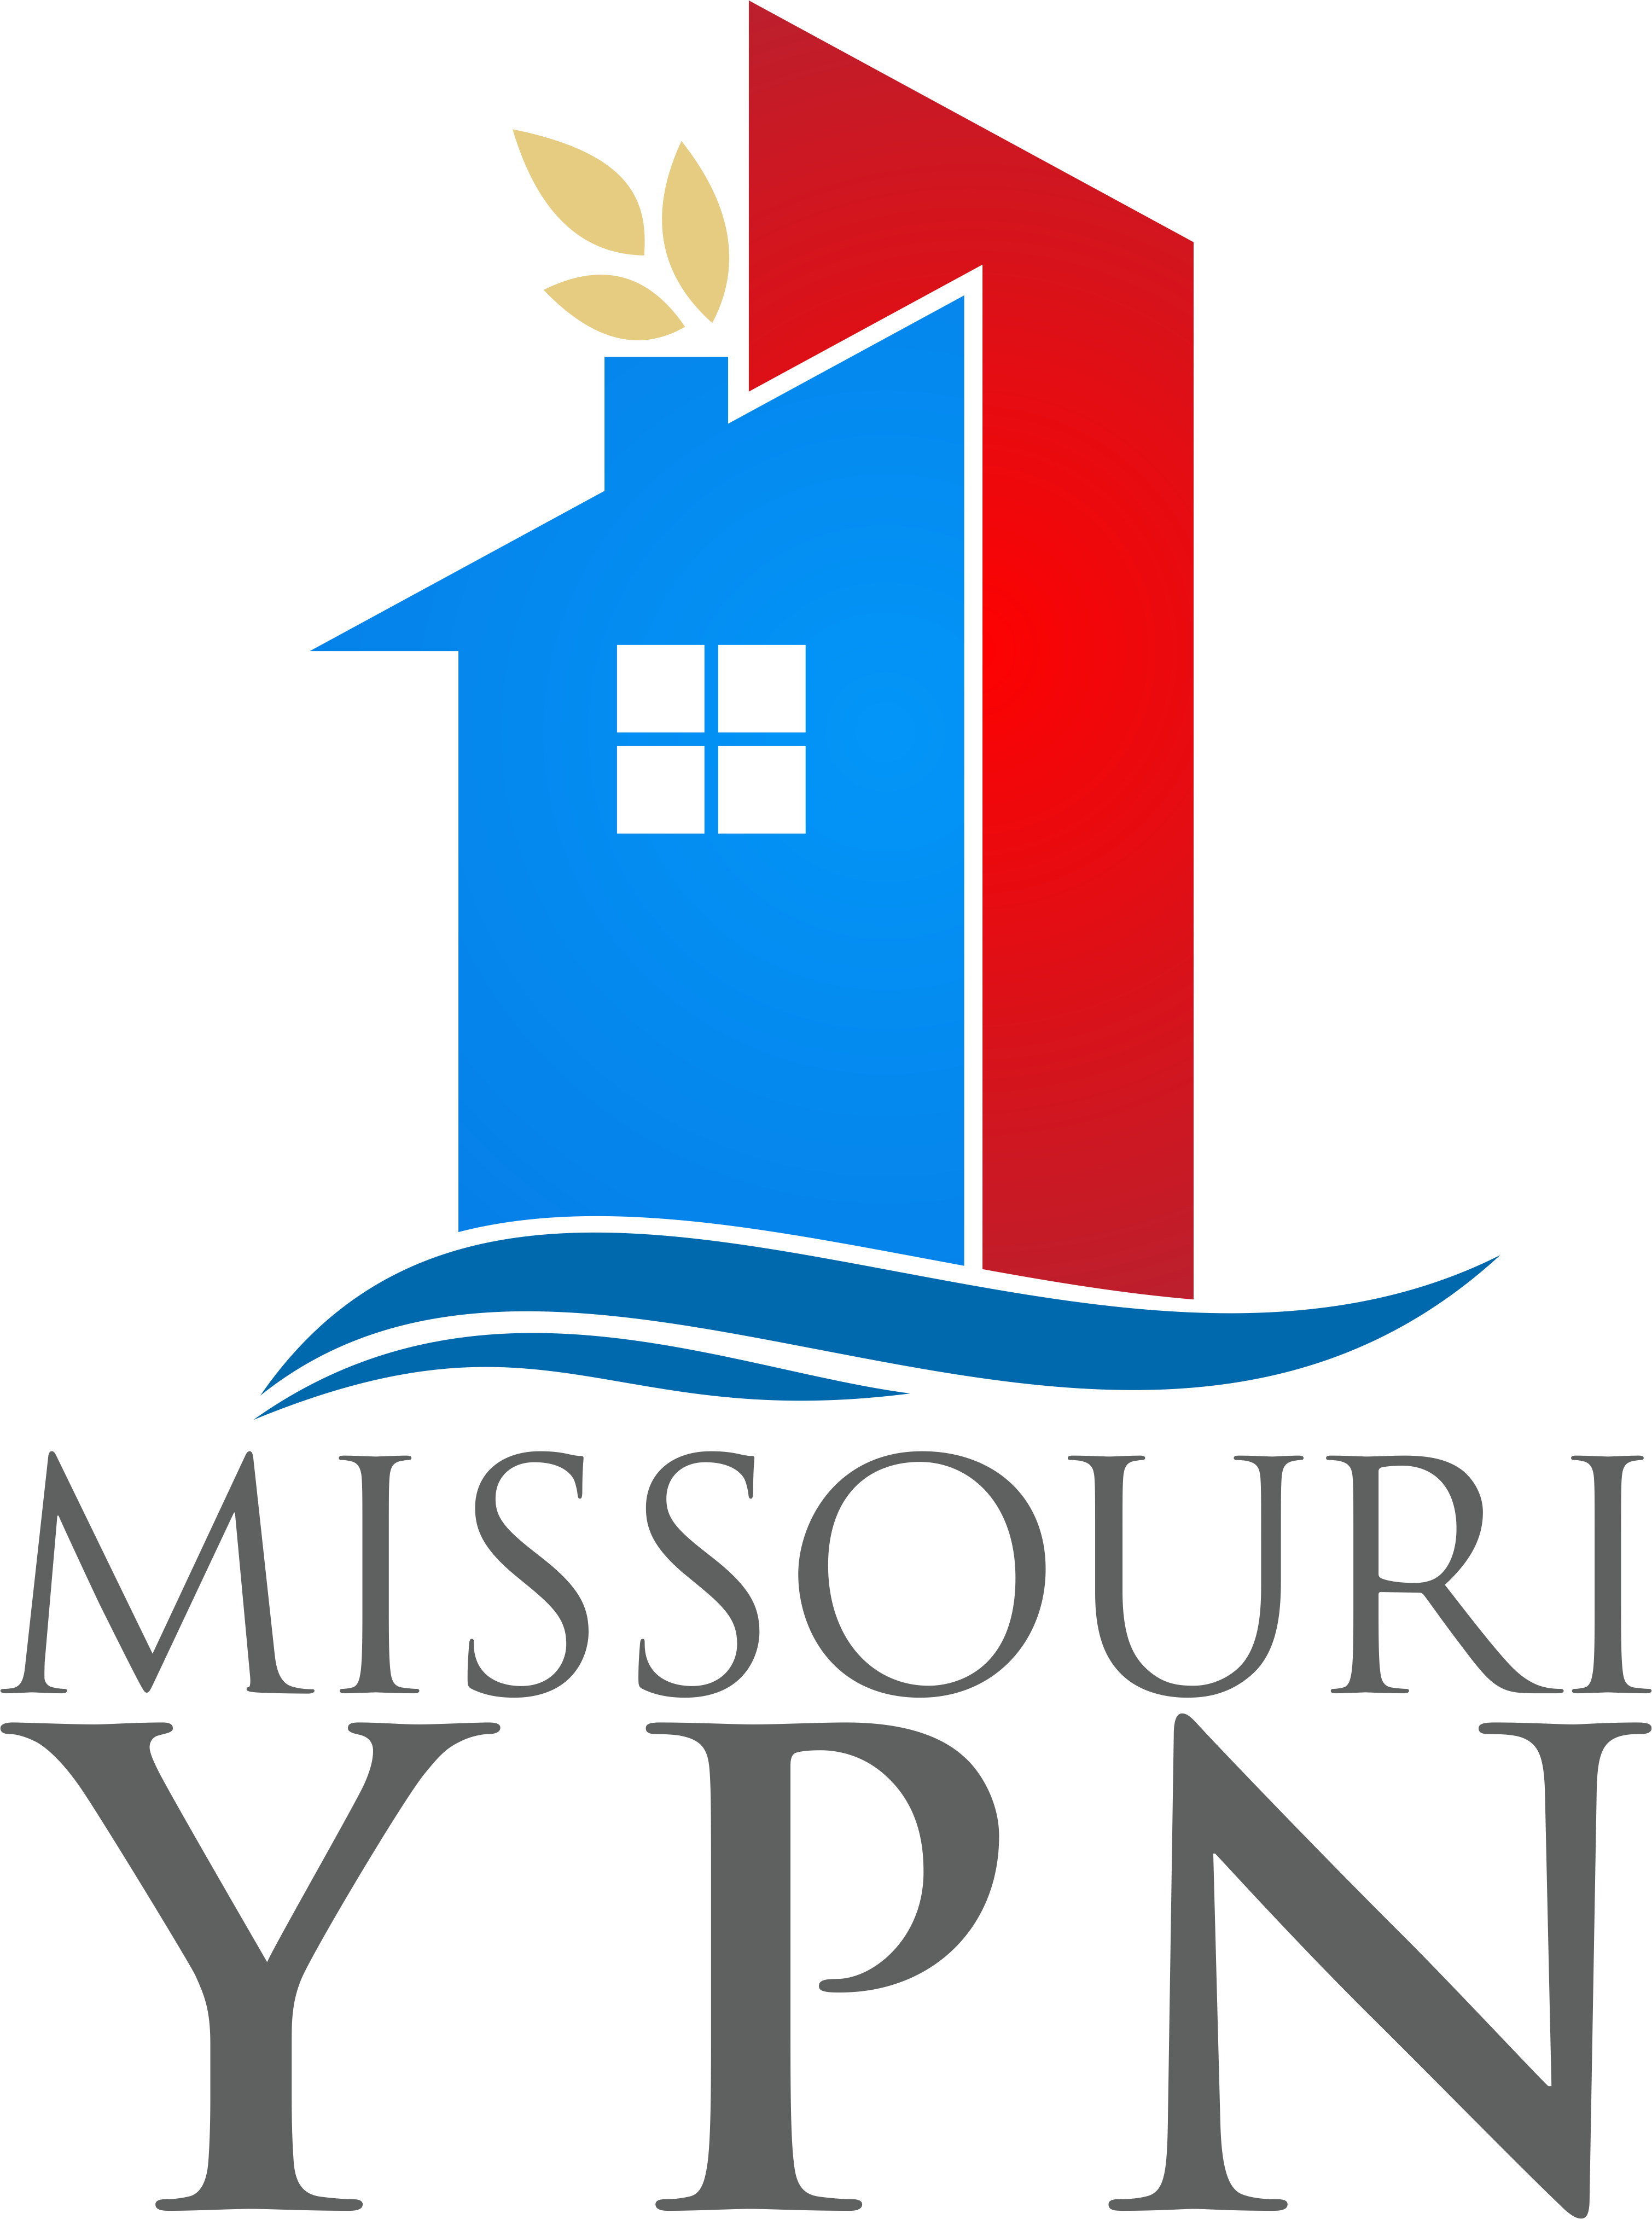 Missouri Ypn Graphic Logo - Yankee Candle (3020x4056)